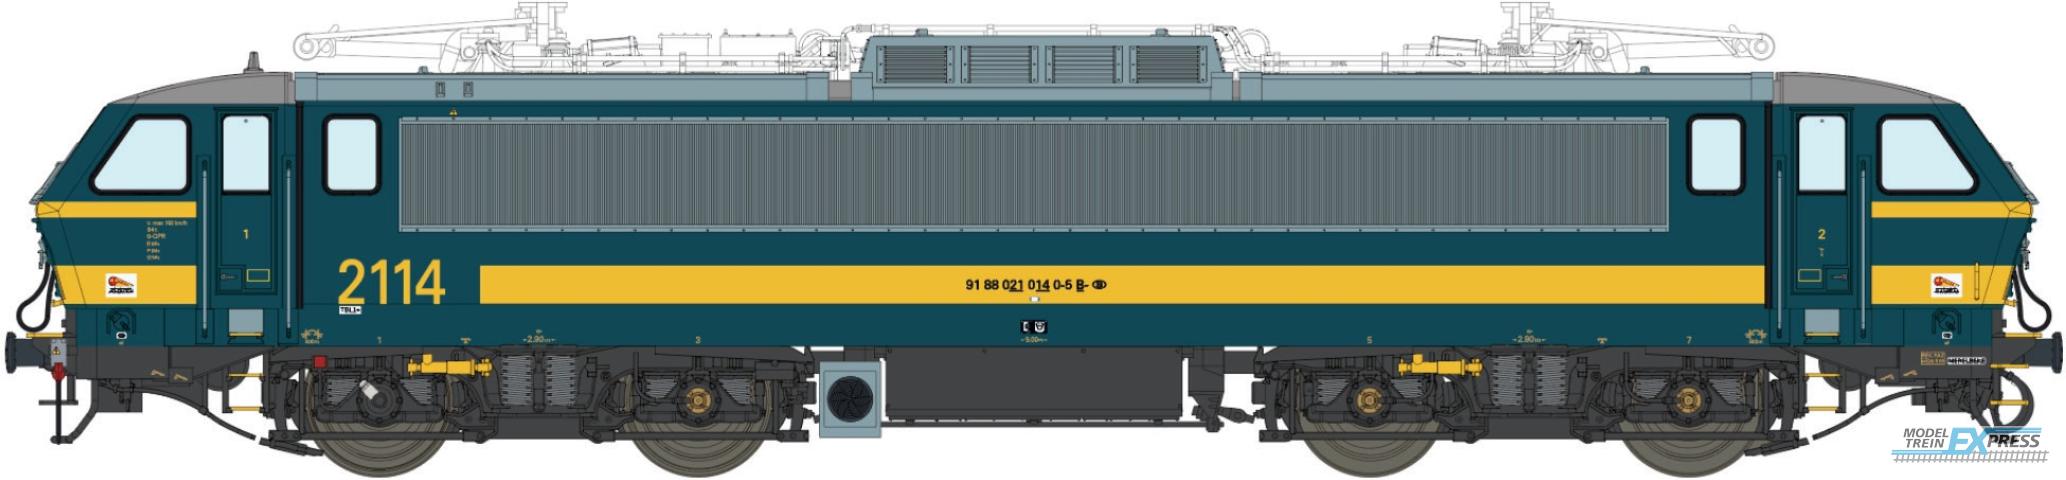 LS Models 12577S 2114, blauw, gele lijn, 1e serie, met airco, Magelan logo  /  Ep. V-VI  /  SNCB  /  HO  /  AC SOUND  /  1 P.